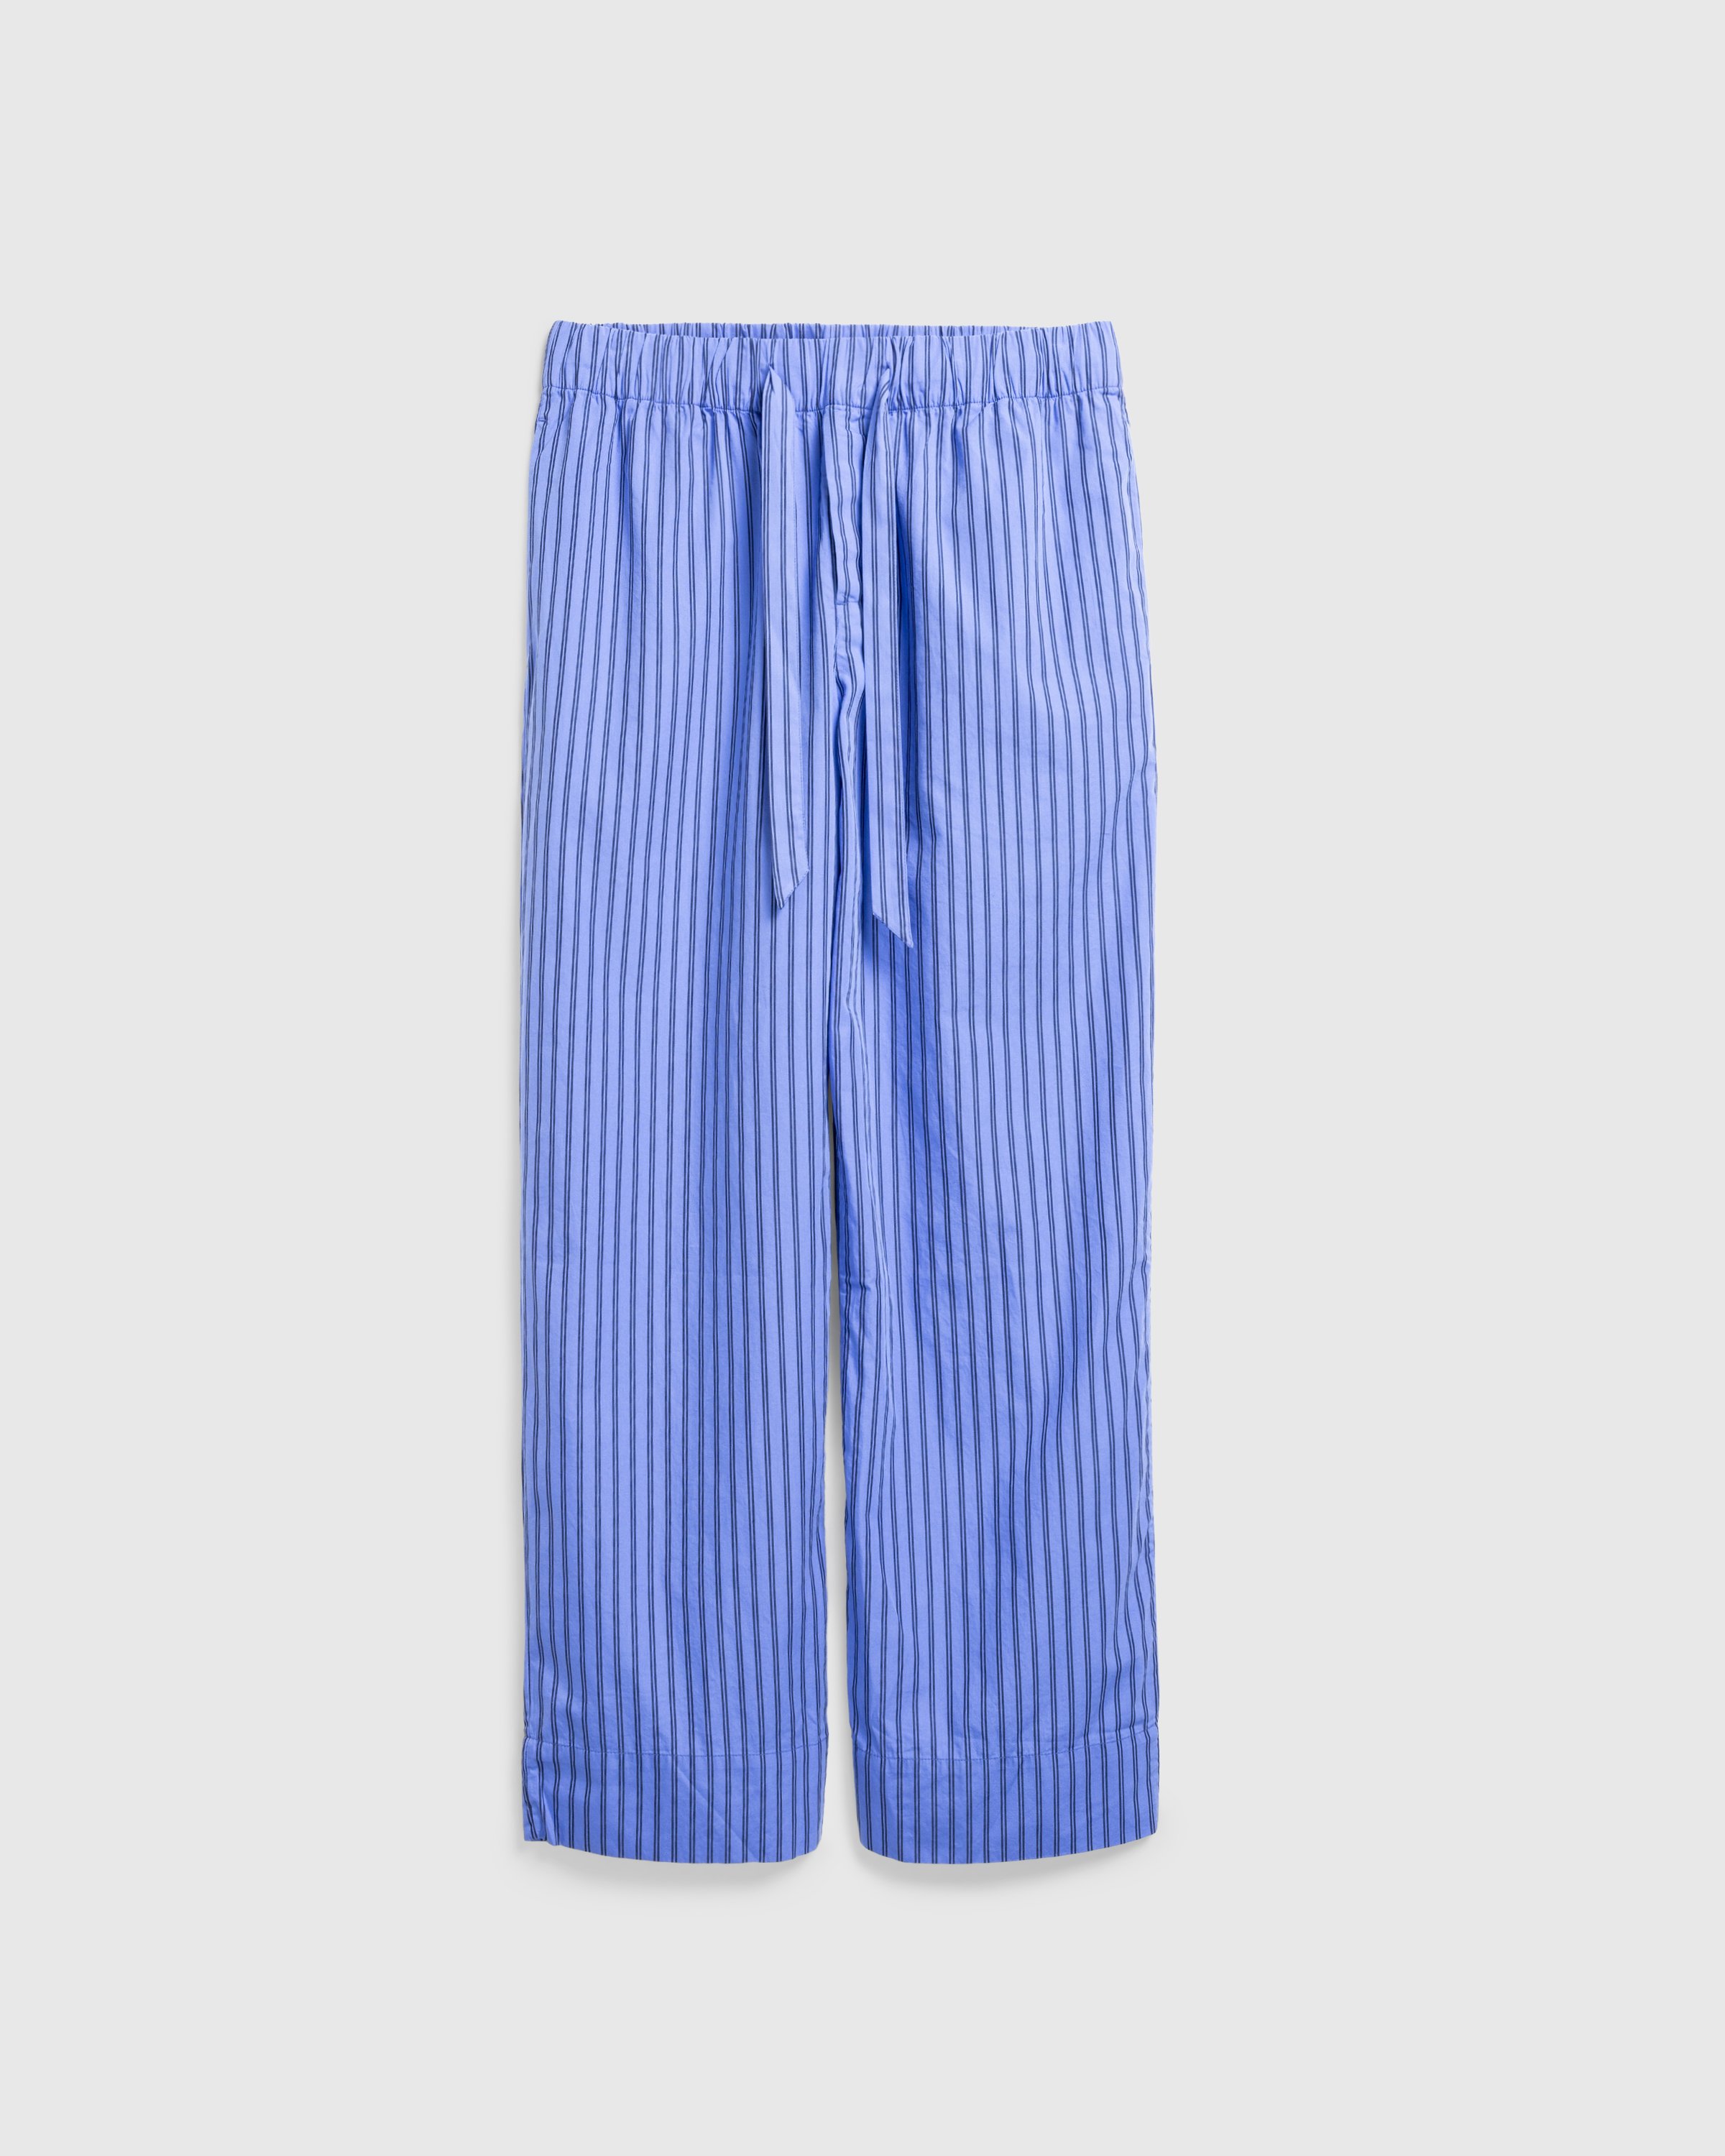 Tekla - Cotton Poplin - Pyjamas Pants Boro Stripes - Clothing - Blue - Image 1